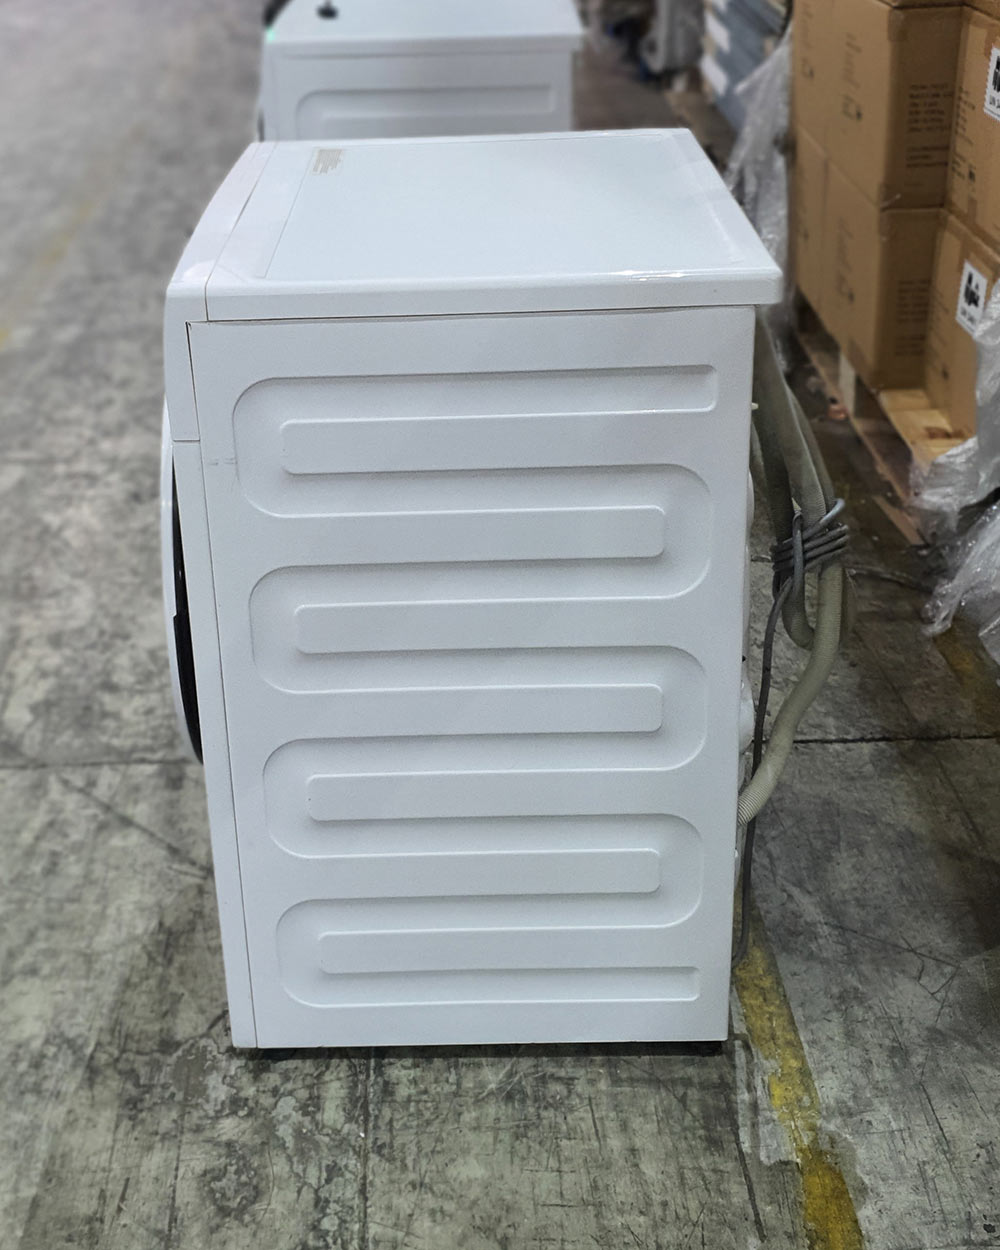 Beko 8kg Washer Dryer WDR8543121W